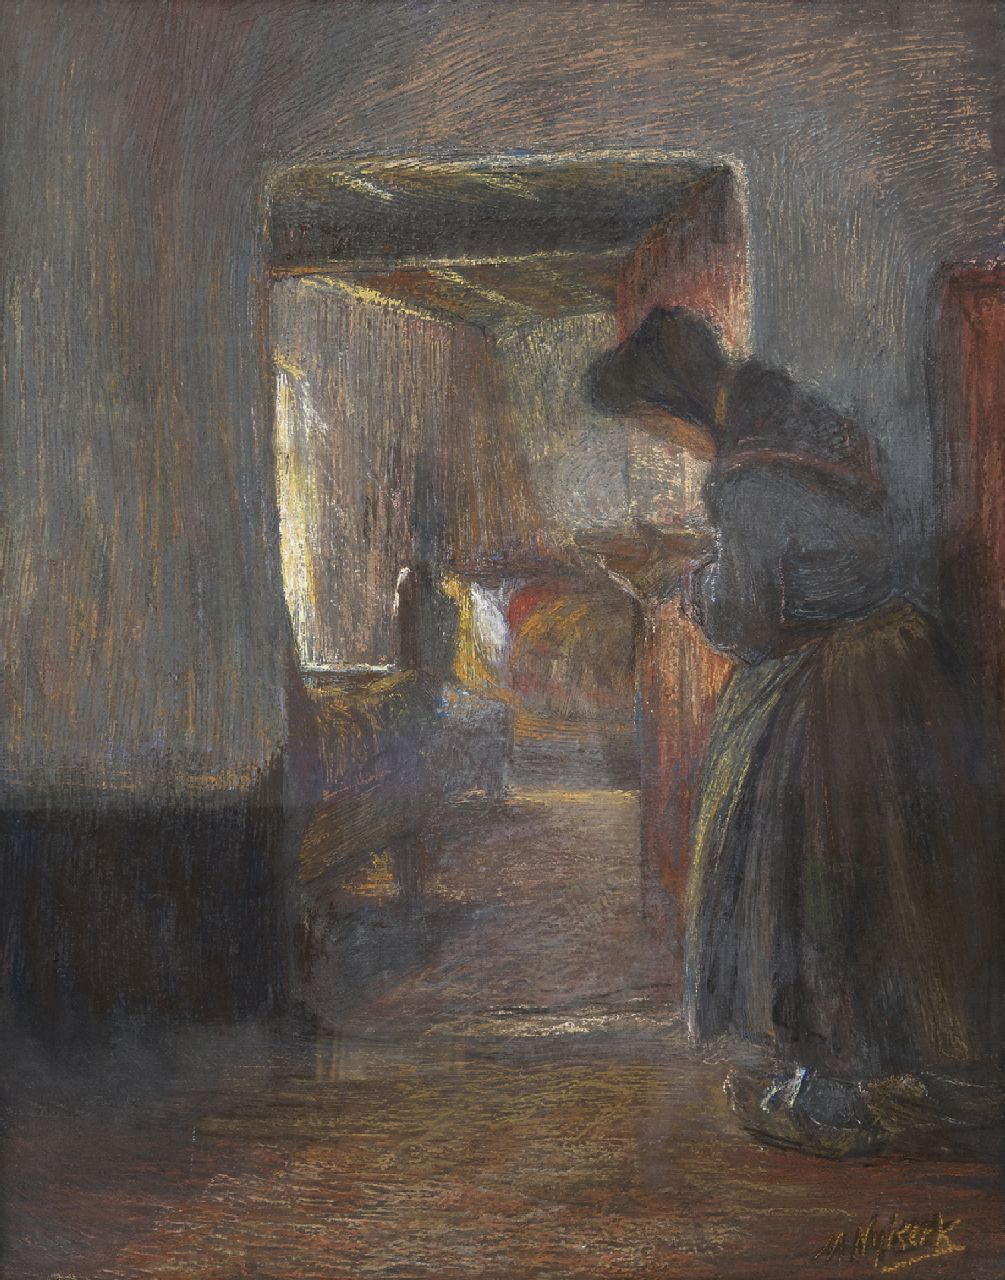 Niekerk M.J.  | 'Maurits' Joseph Niekerk, Taking good care, pastel and oil on canvas 55.4 x 43.3 cm, signed l.r.